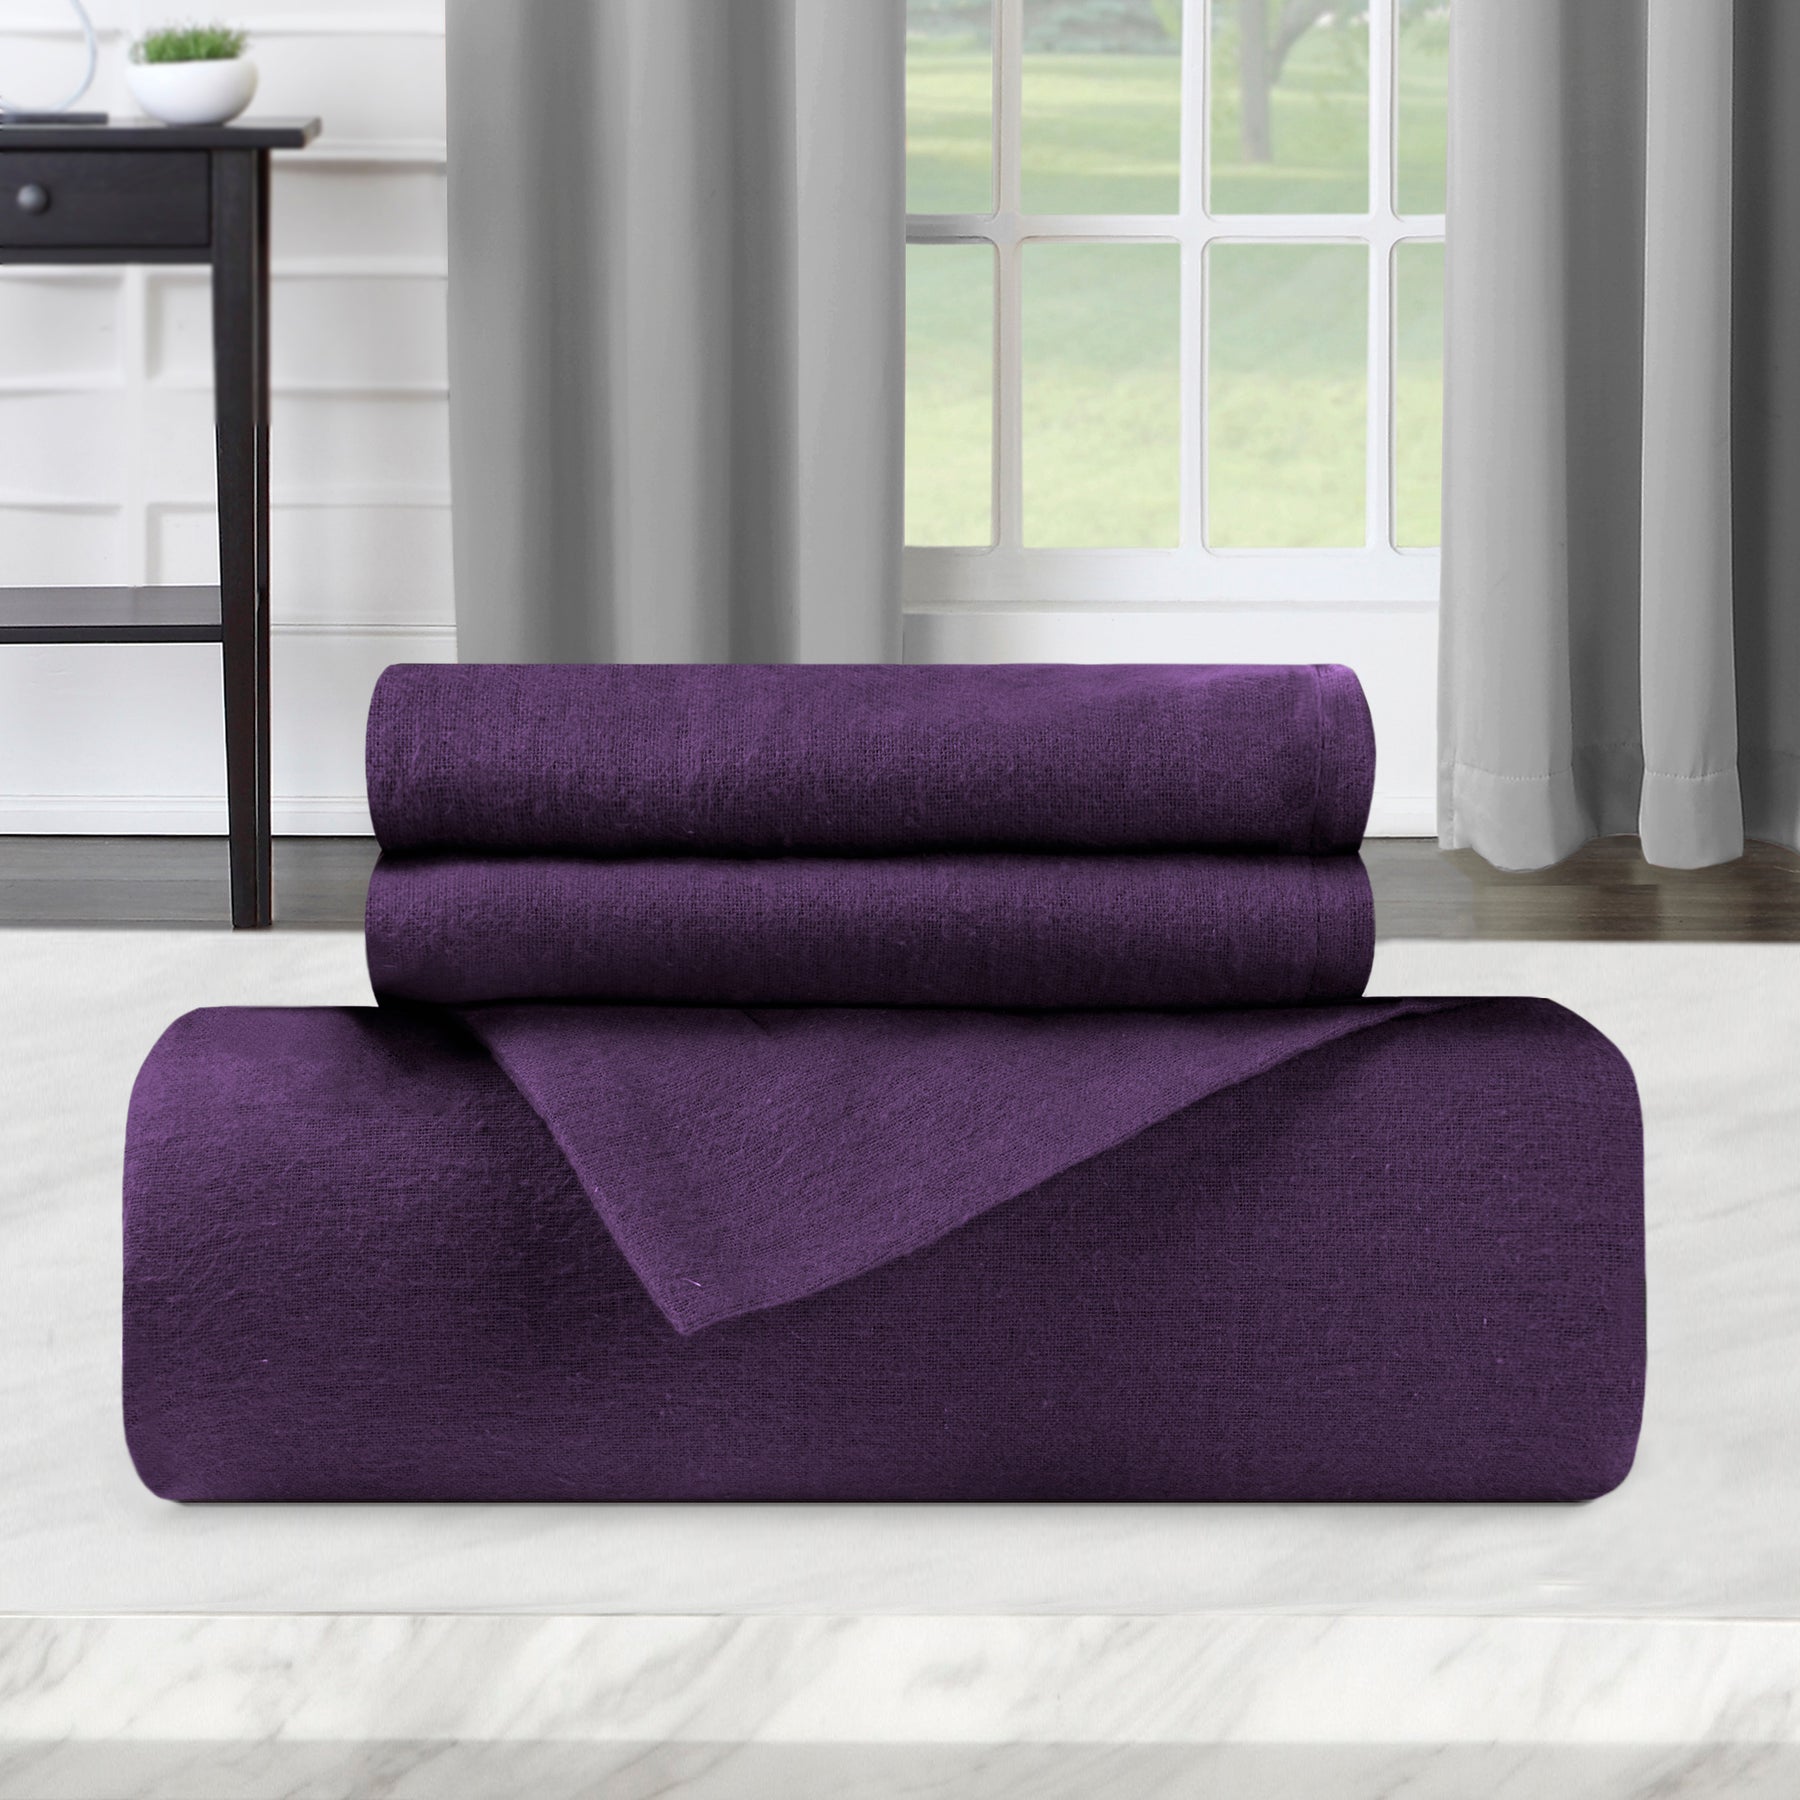 Superior Flannel Cotton Solid Modern Luxury Duvet Cover Set - Purple